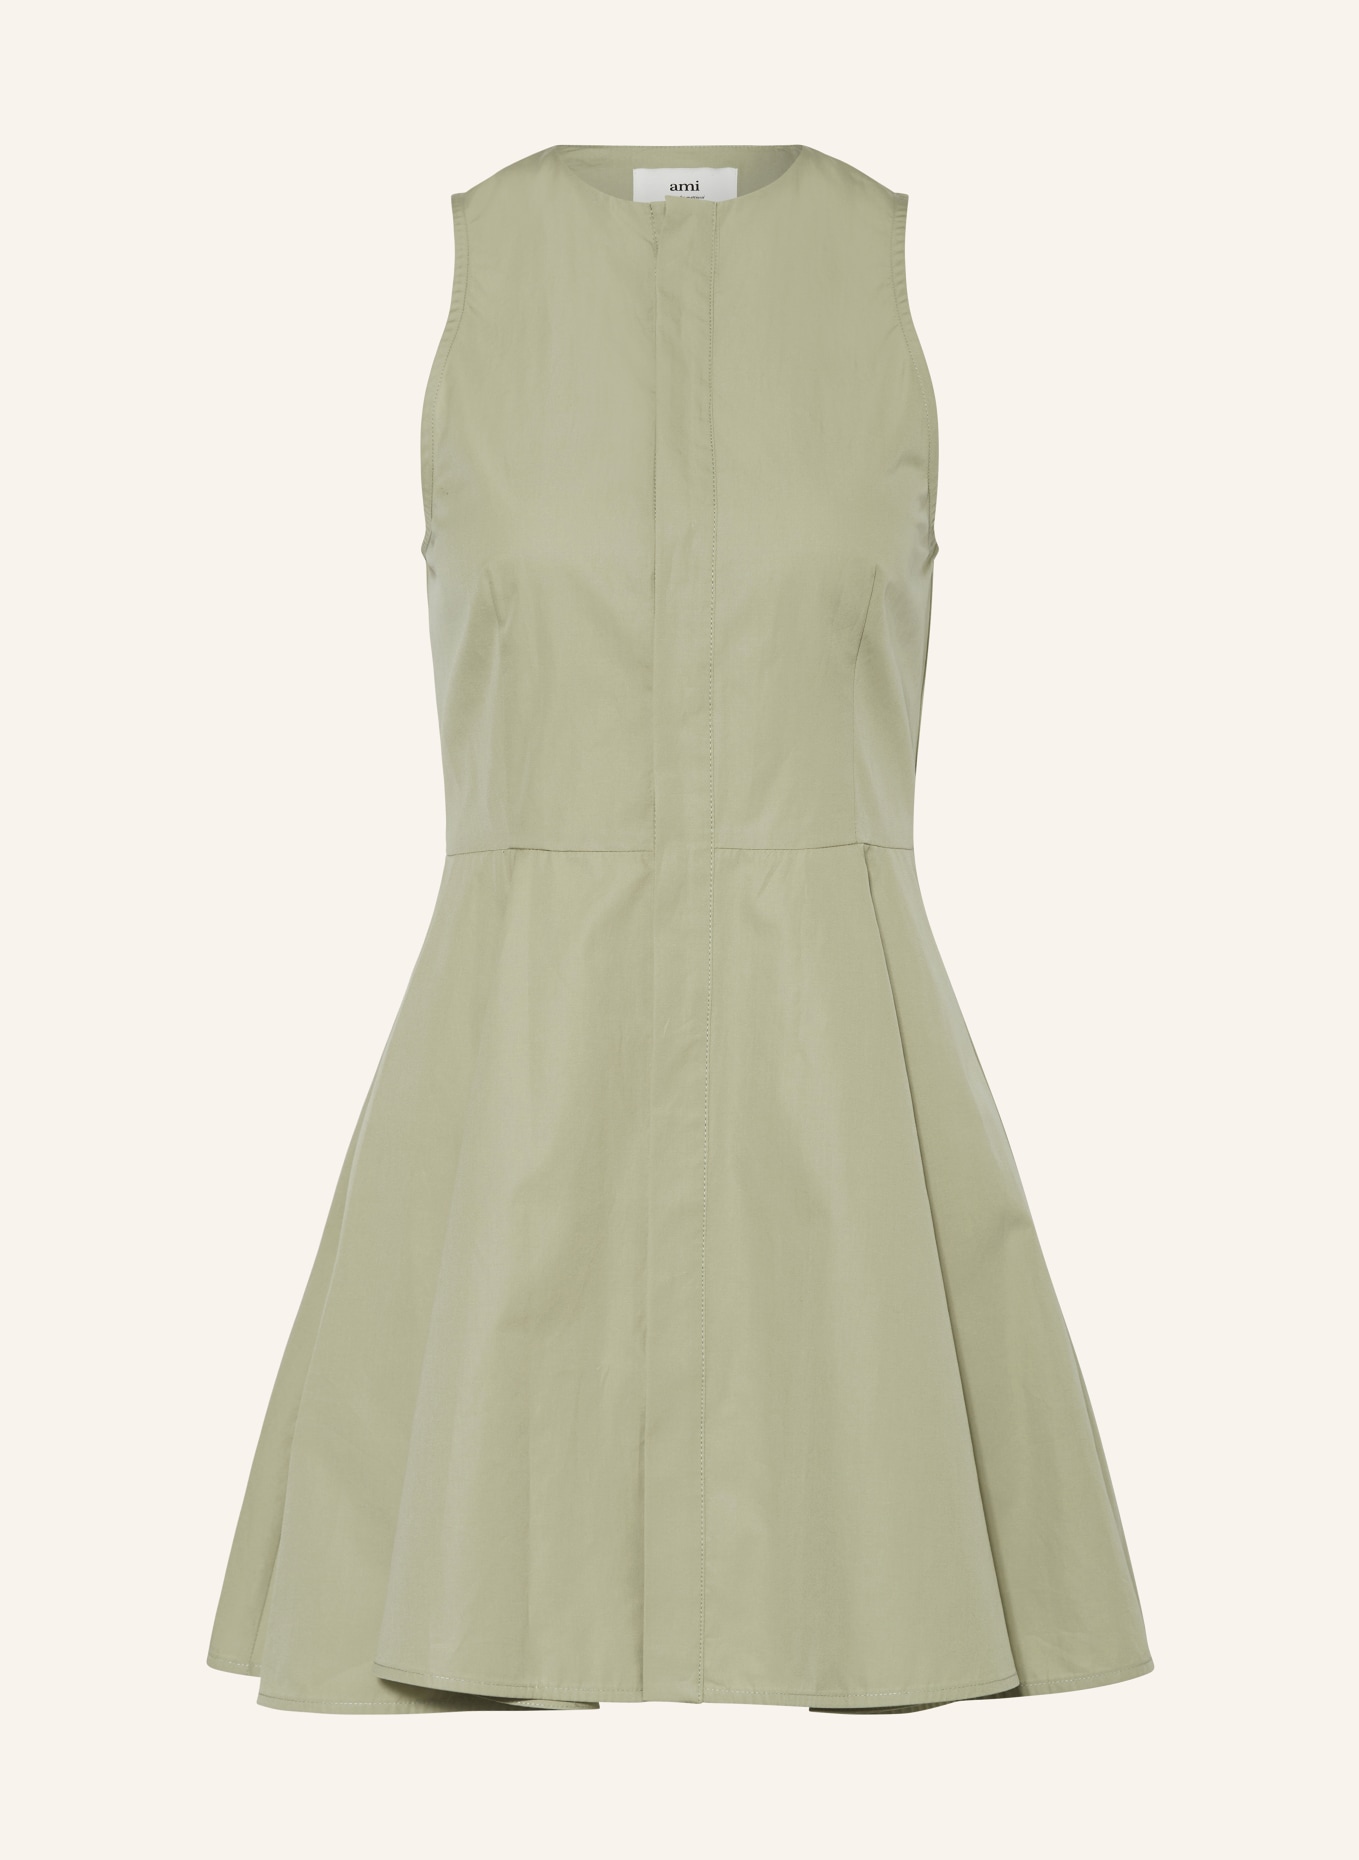 AMI PARIS Kleid, Farbe: HELLGRÜN (Bild 1)